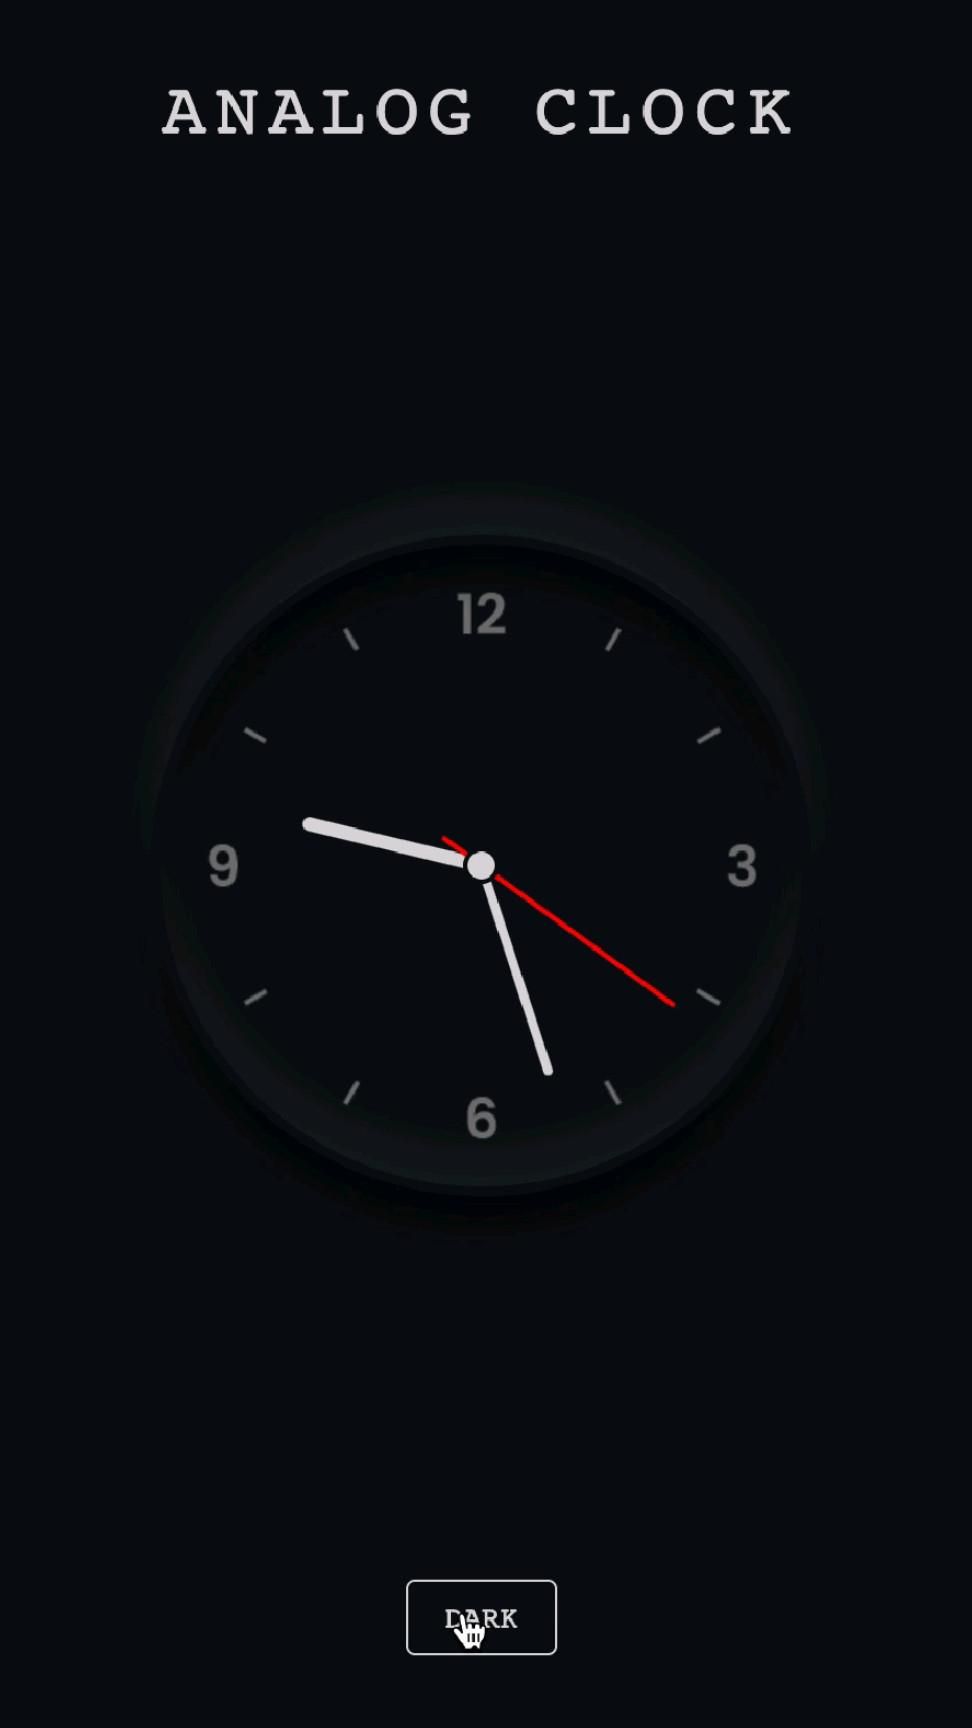 Analog Clock With Dark Light Theme. IPhone Wallpaper Clock, Clock Wallpaper, Analog Clock